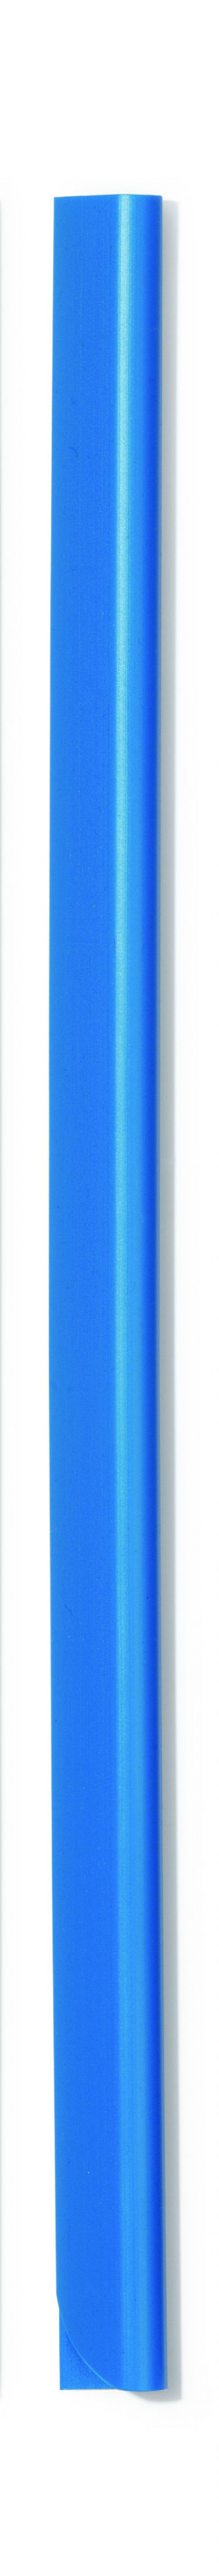 Spine Bars Durable Spine Bar A4 6mm Blue (Pack 100)